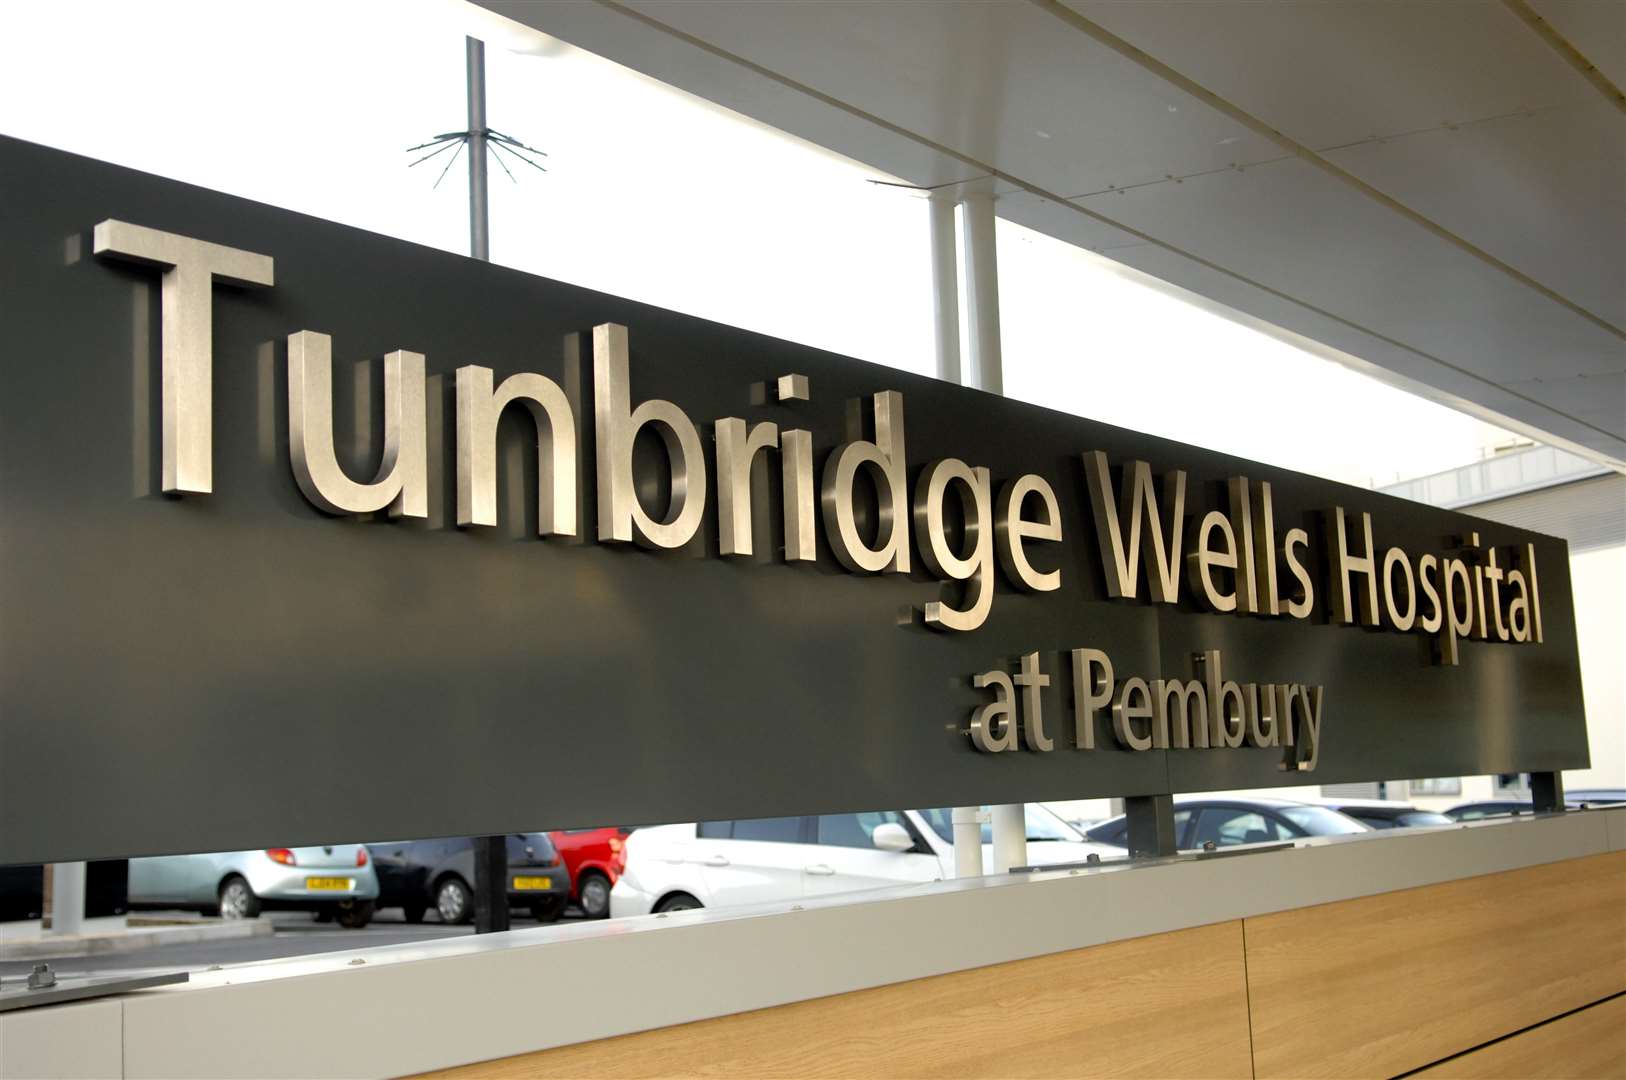 The Tunbridge Wells Hospital at Pembury. Picture: Matthew Walker